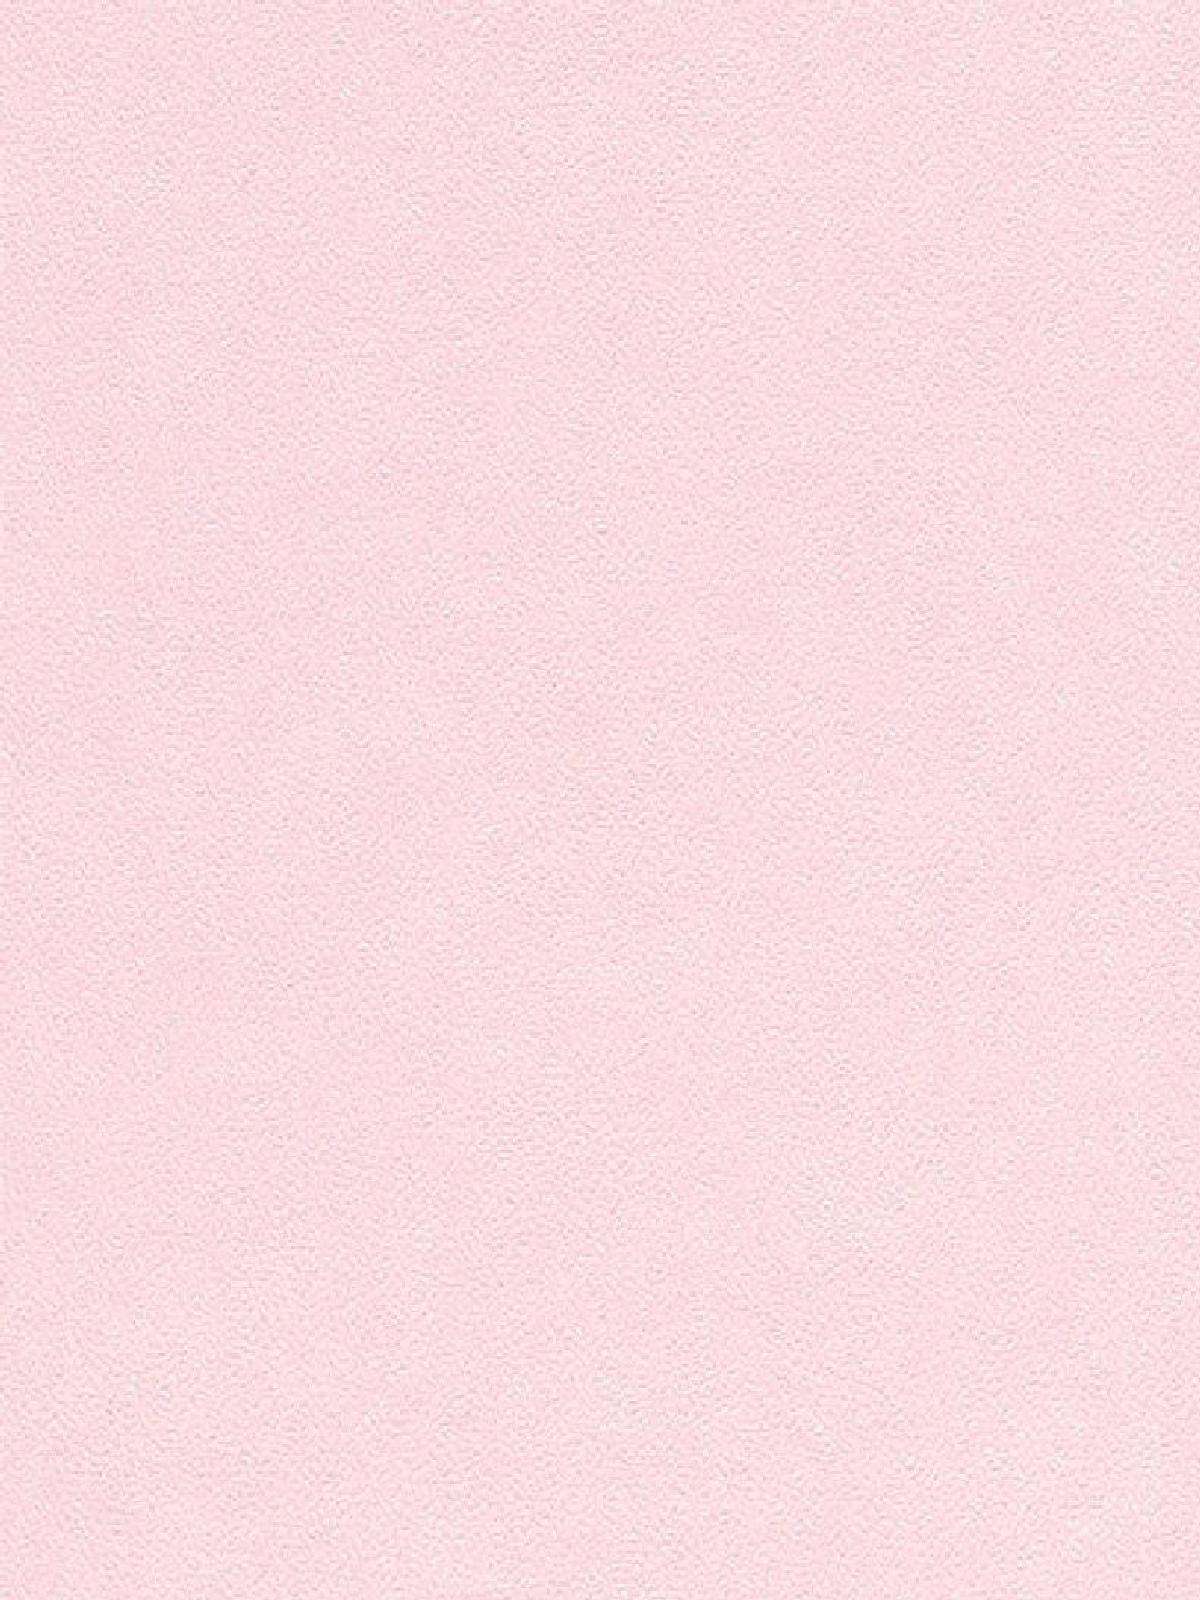 Download 560+ Background Pink Polos Soft Paling Keren